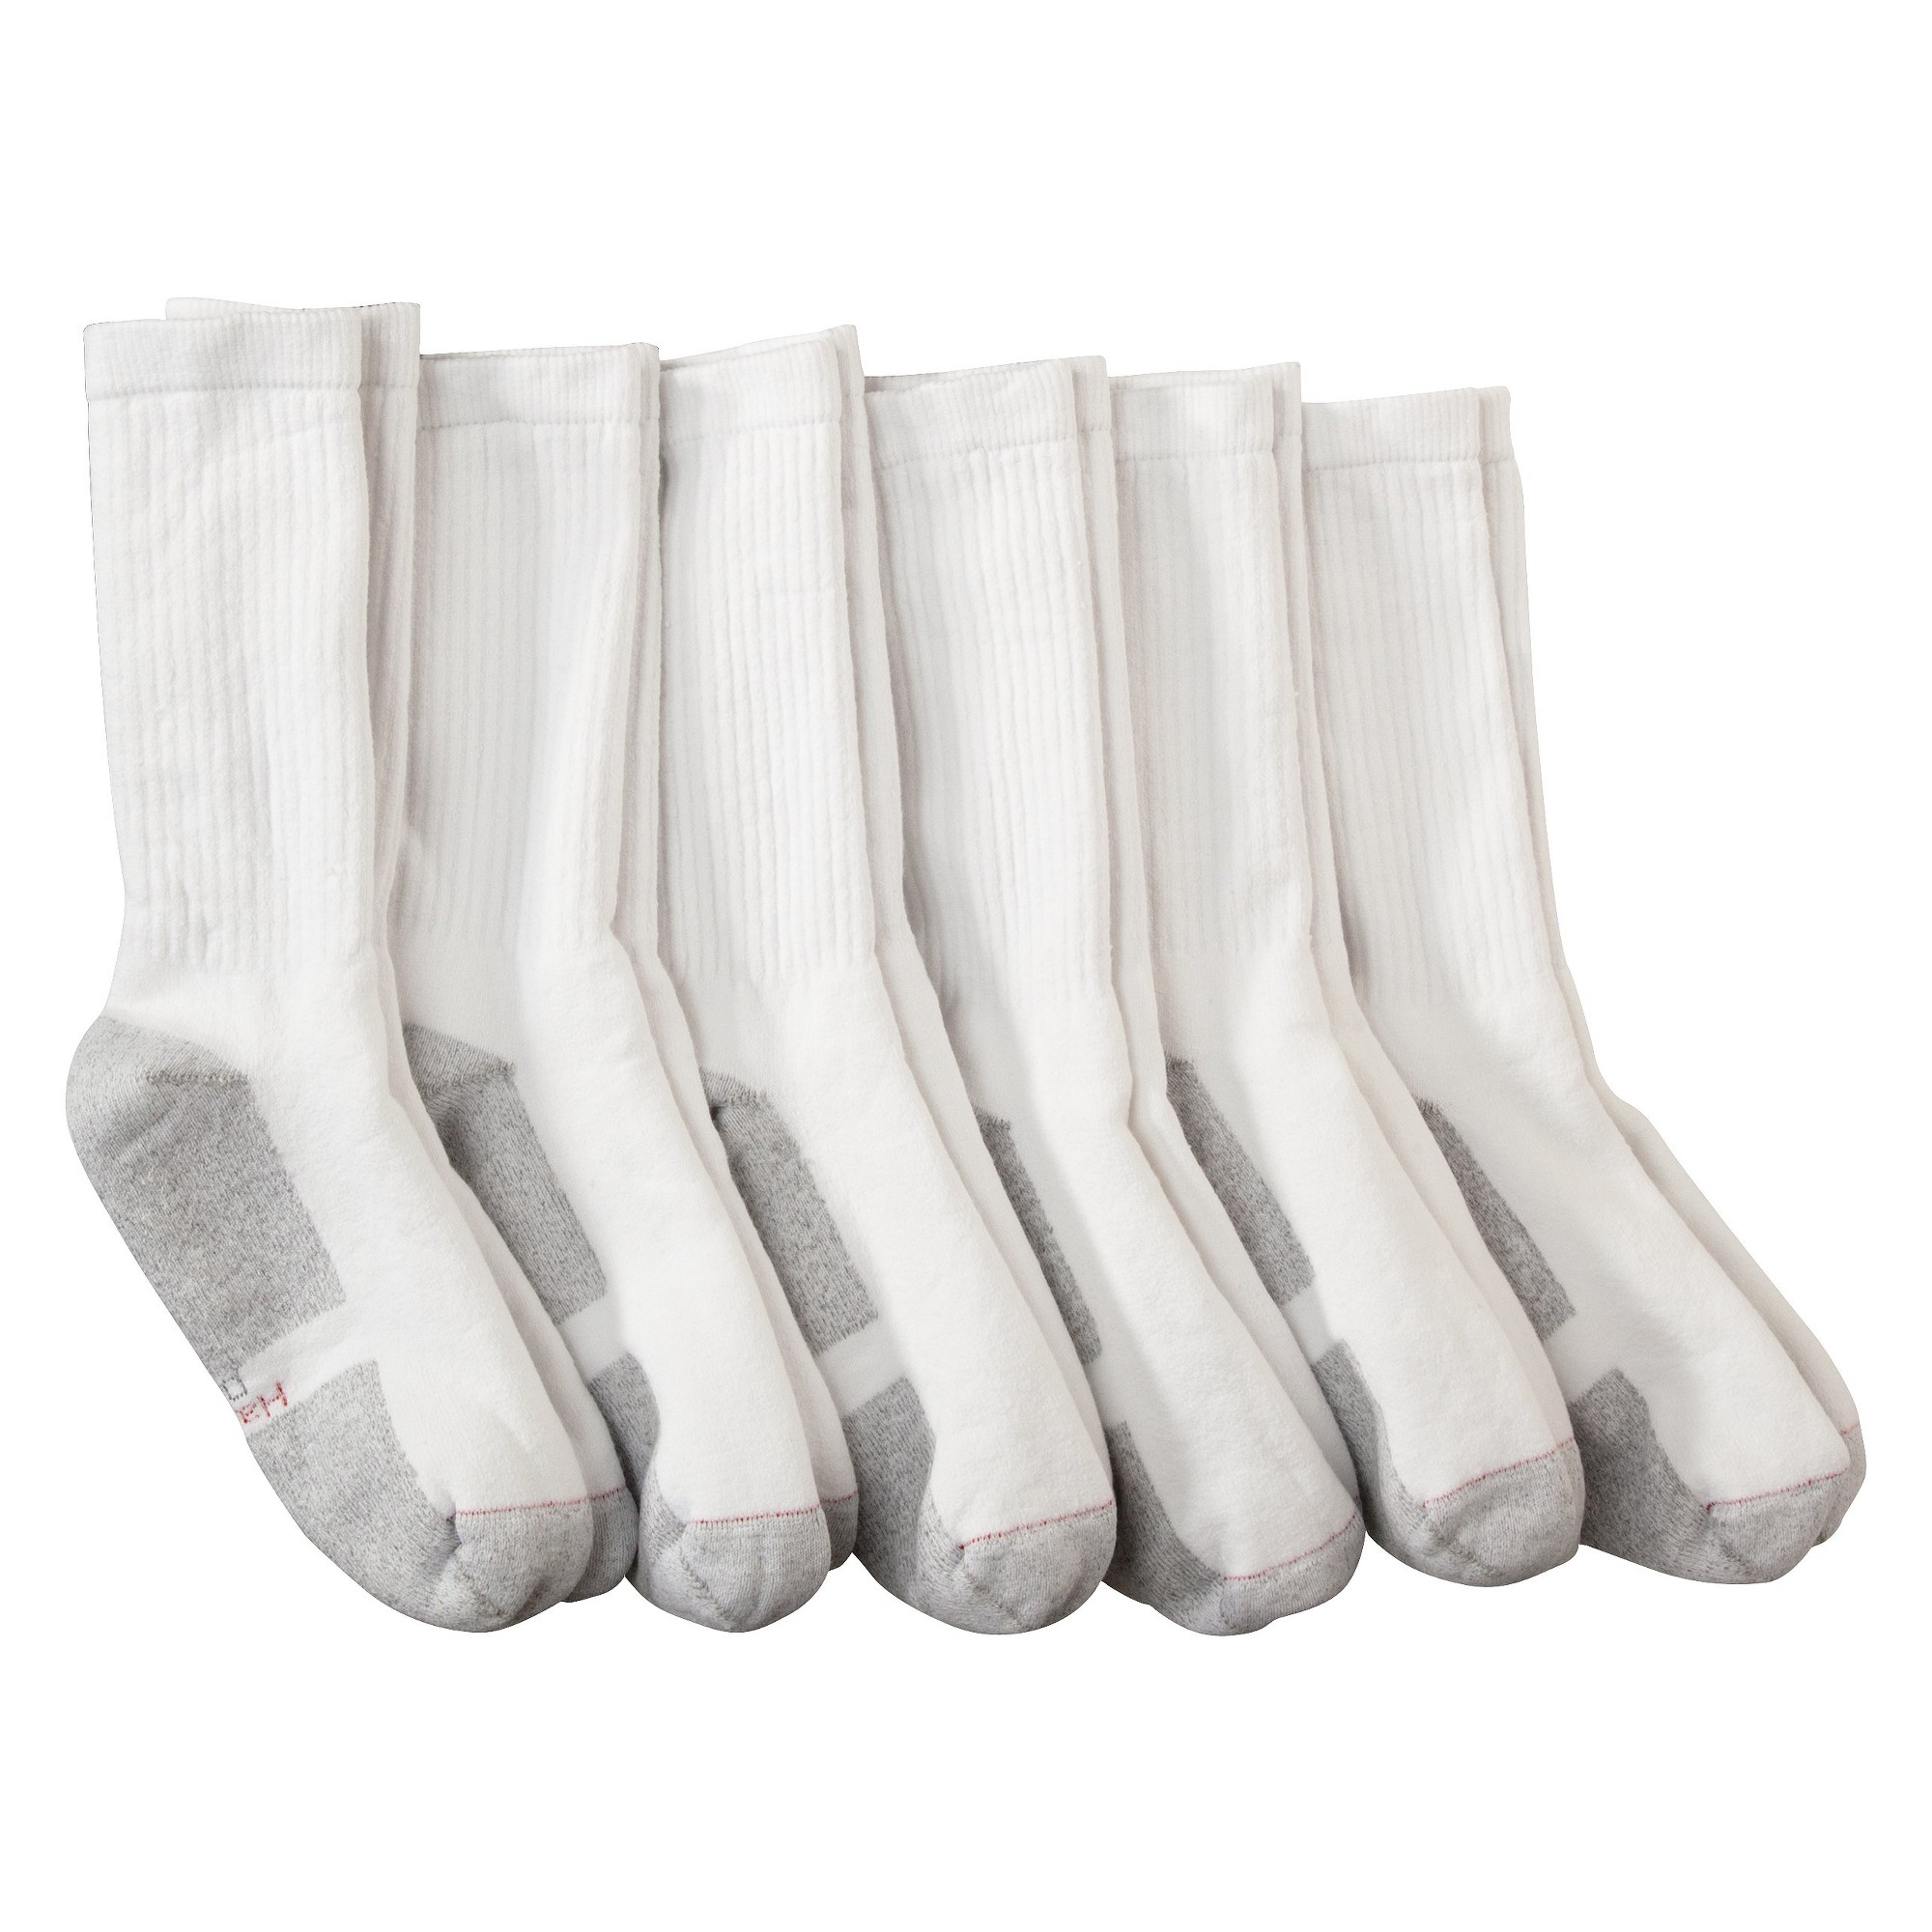 Men's Hanes Premium Xtemp Dry 6Pk White Crew Socks, Size: Small